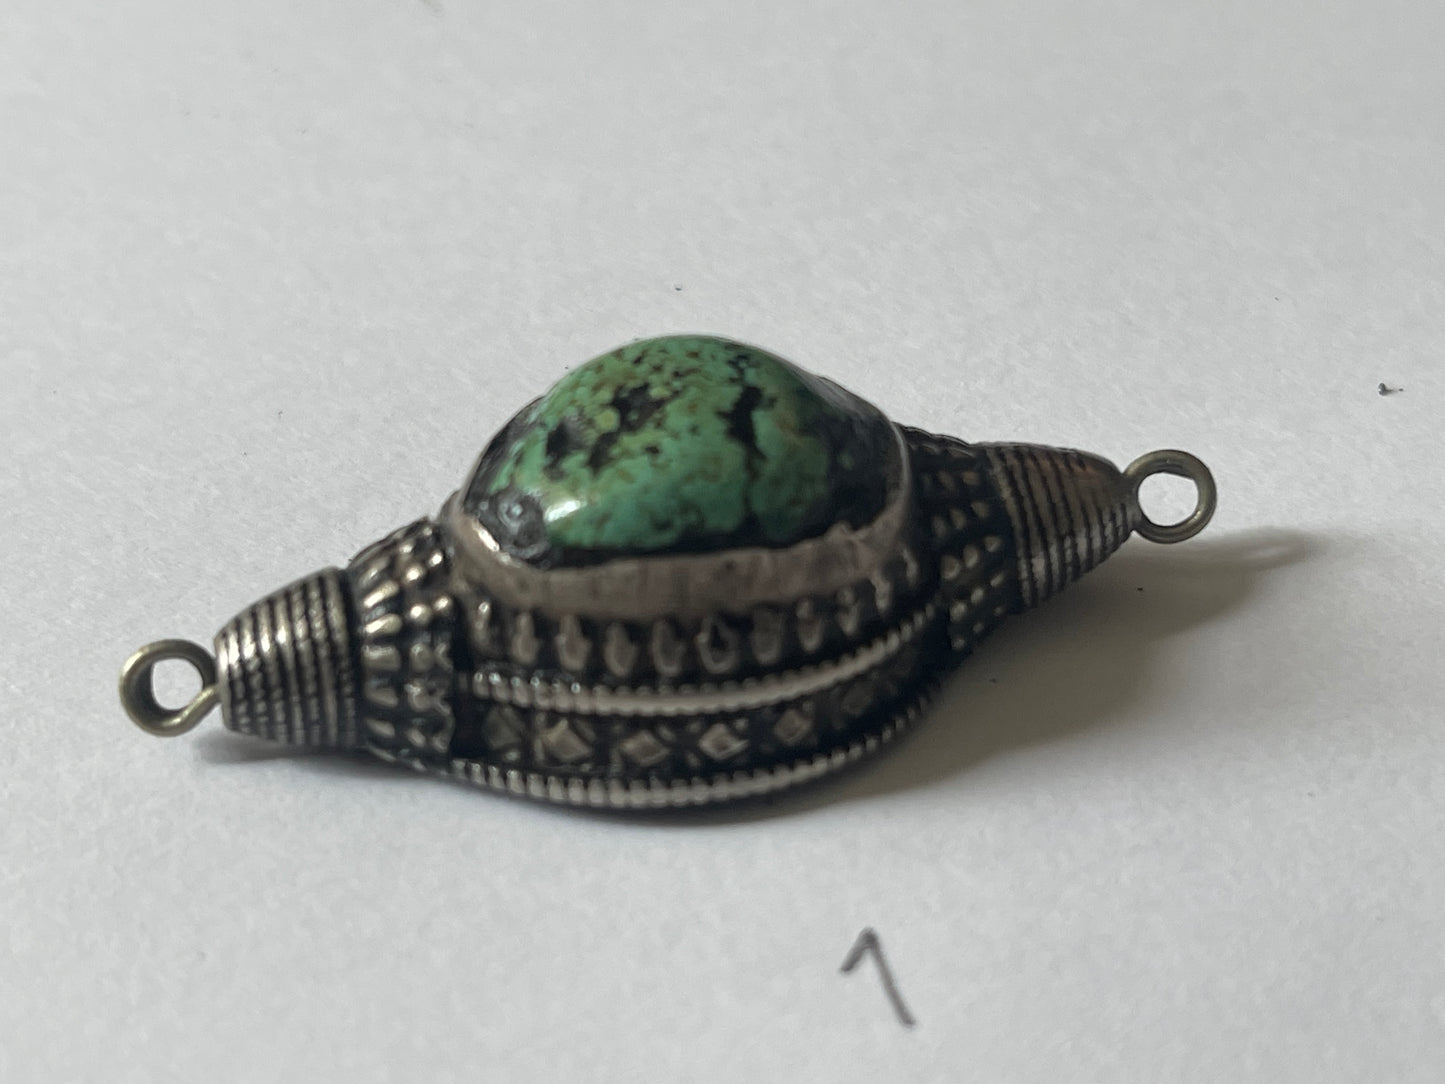 Antique Tibetan Turquoise hair beads